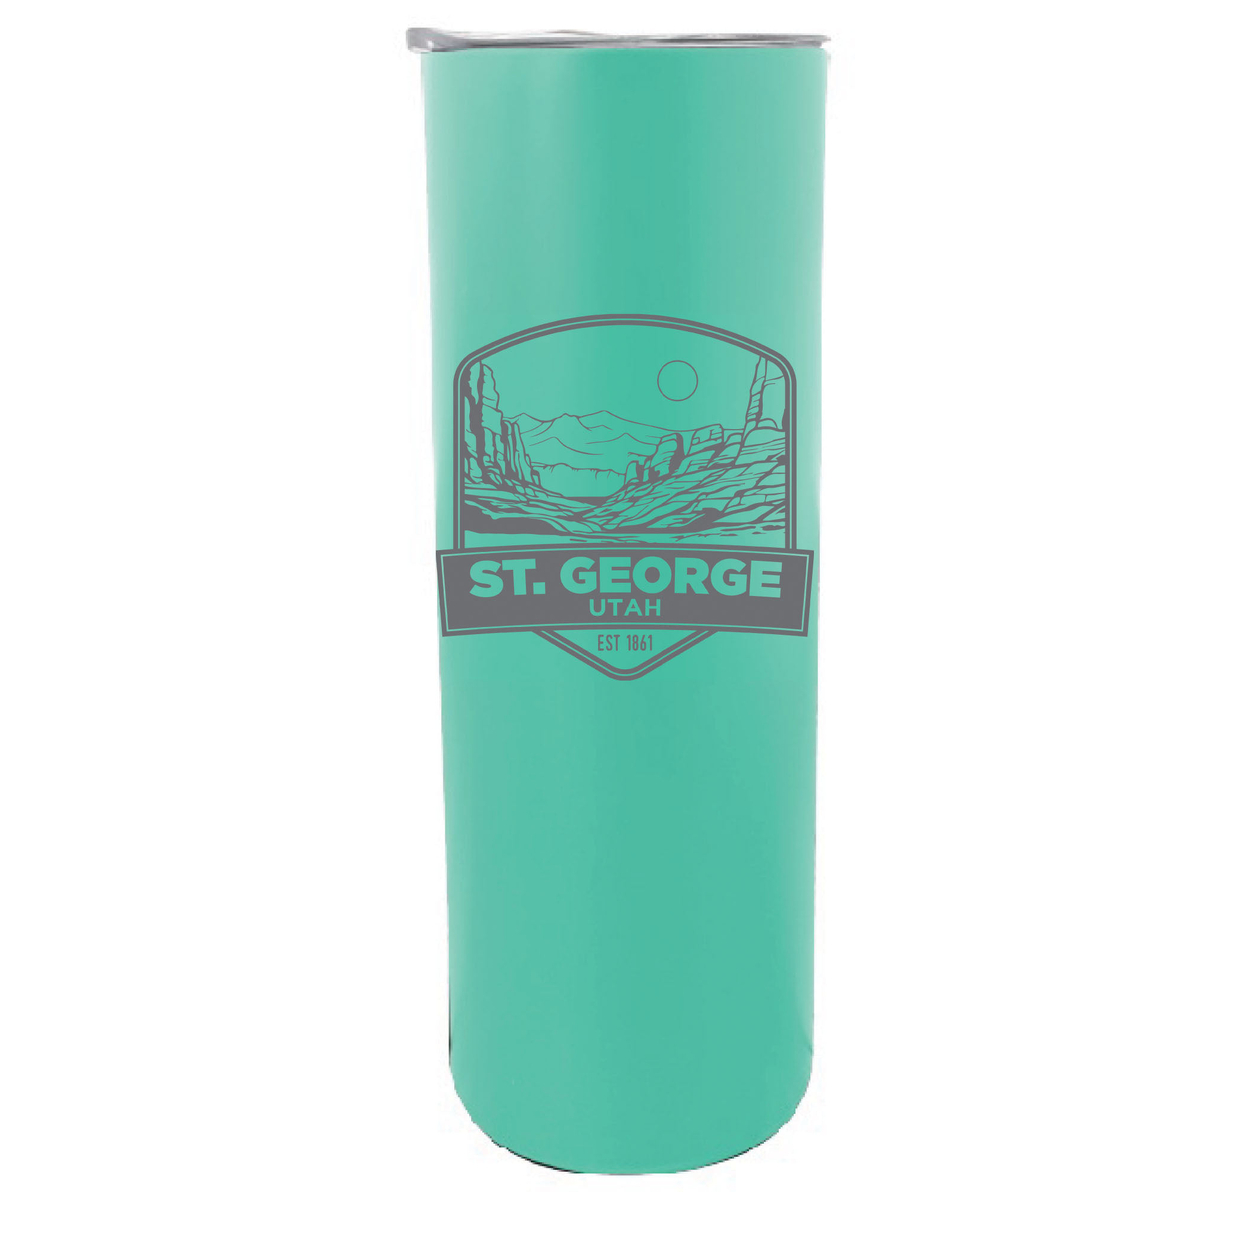 St. George Utah Souvenir 20 Oz Engraved Insulated Stainless Steel Skinny Tumbler - Seafoam,,4-Pack